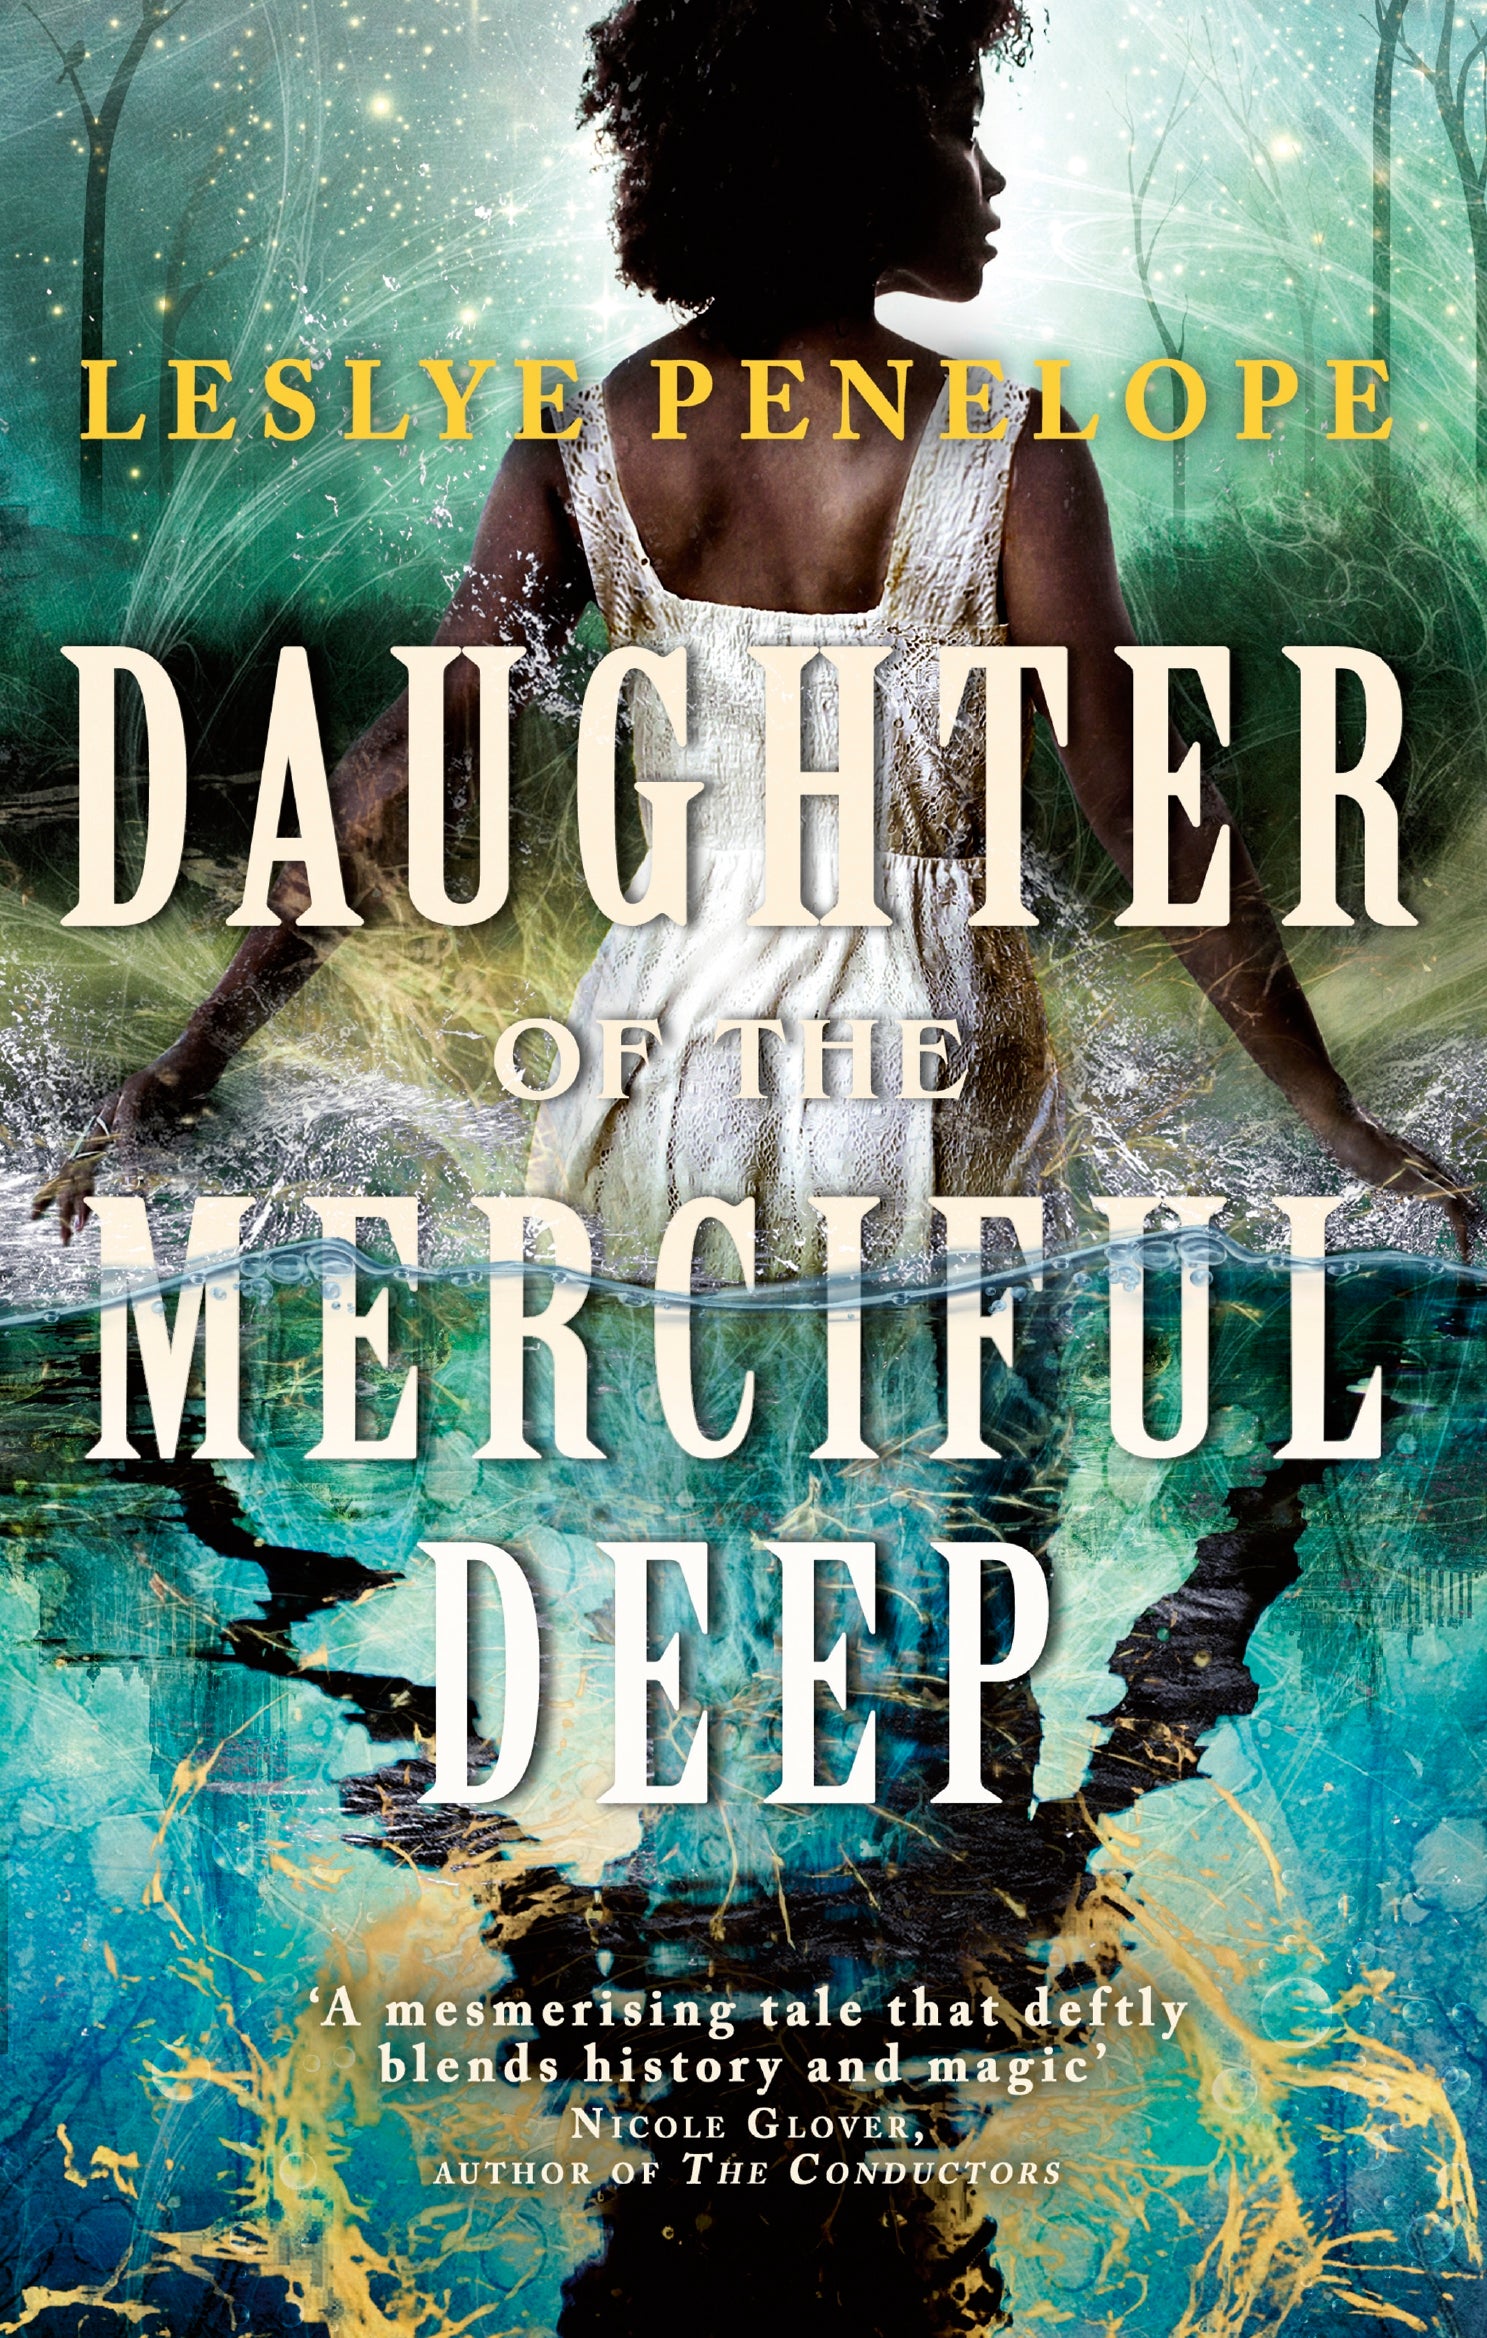 Daughter of the Merciful Deep by Leslye Penelope